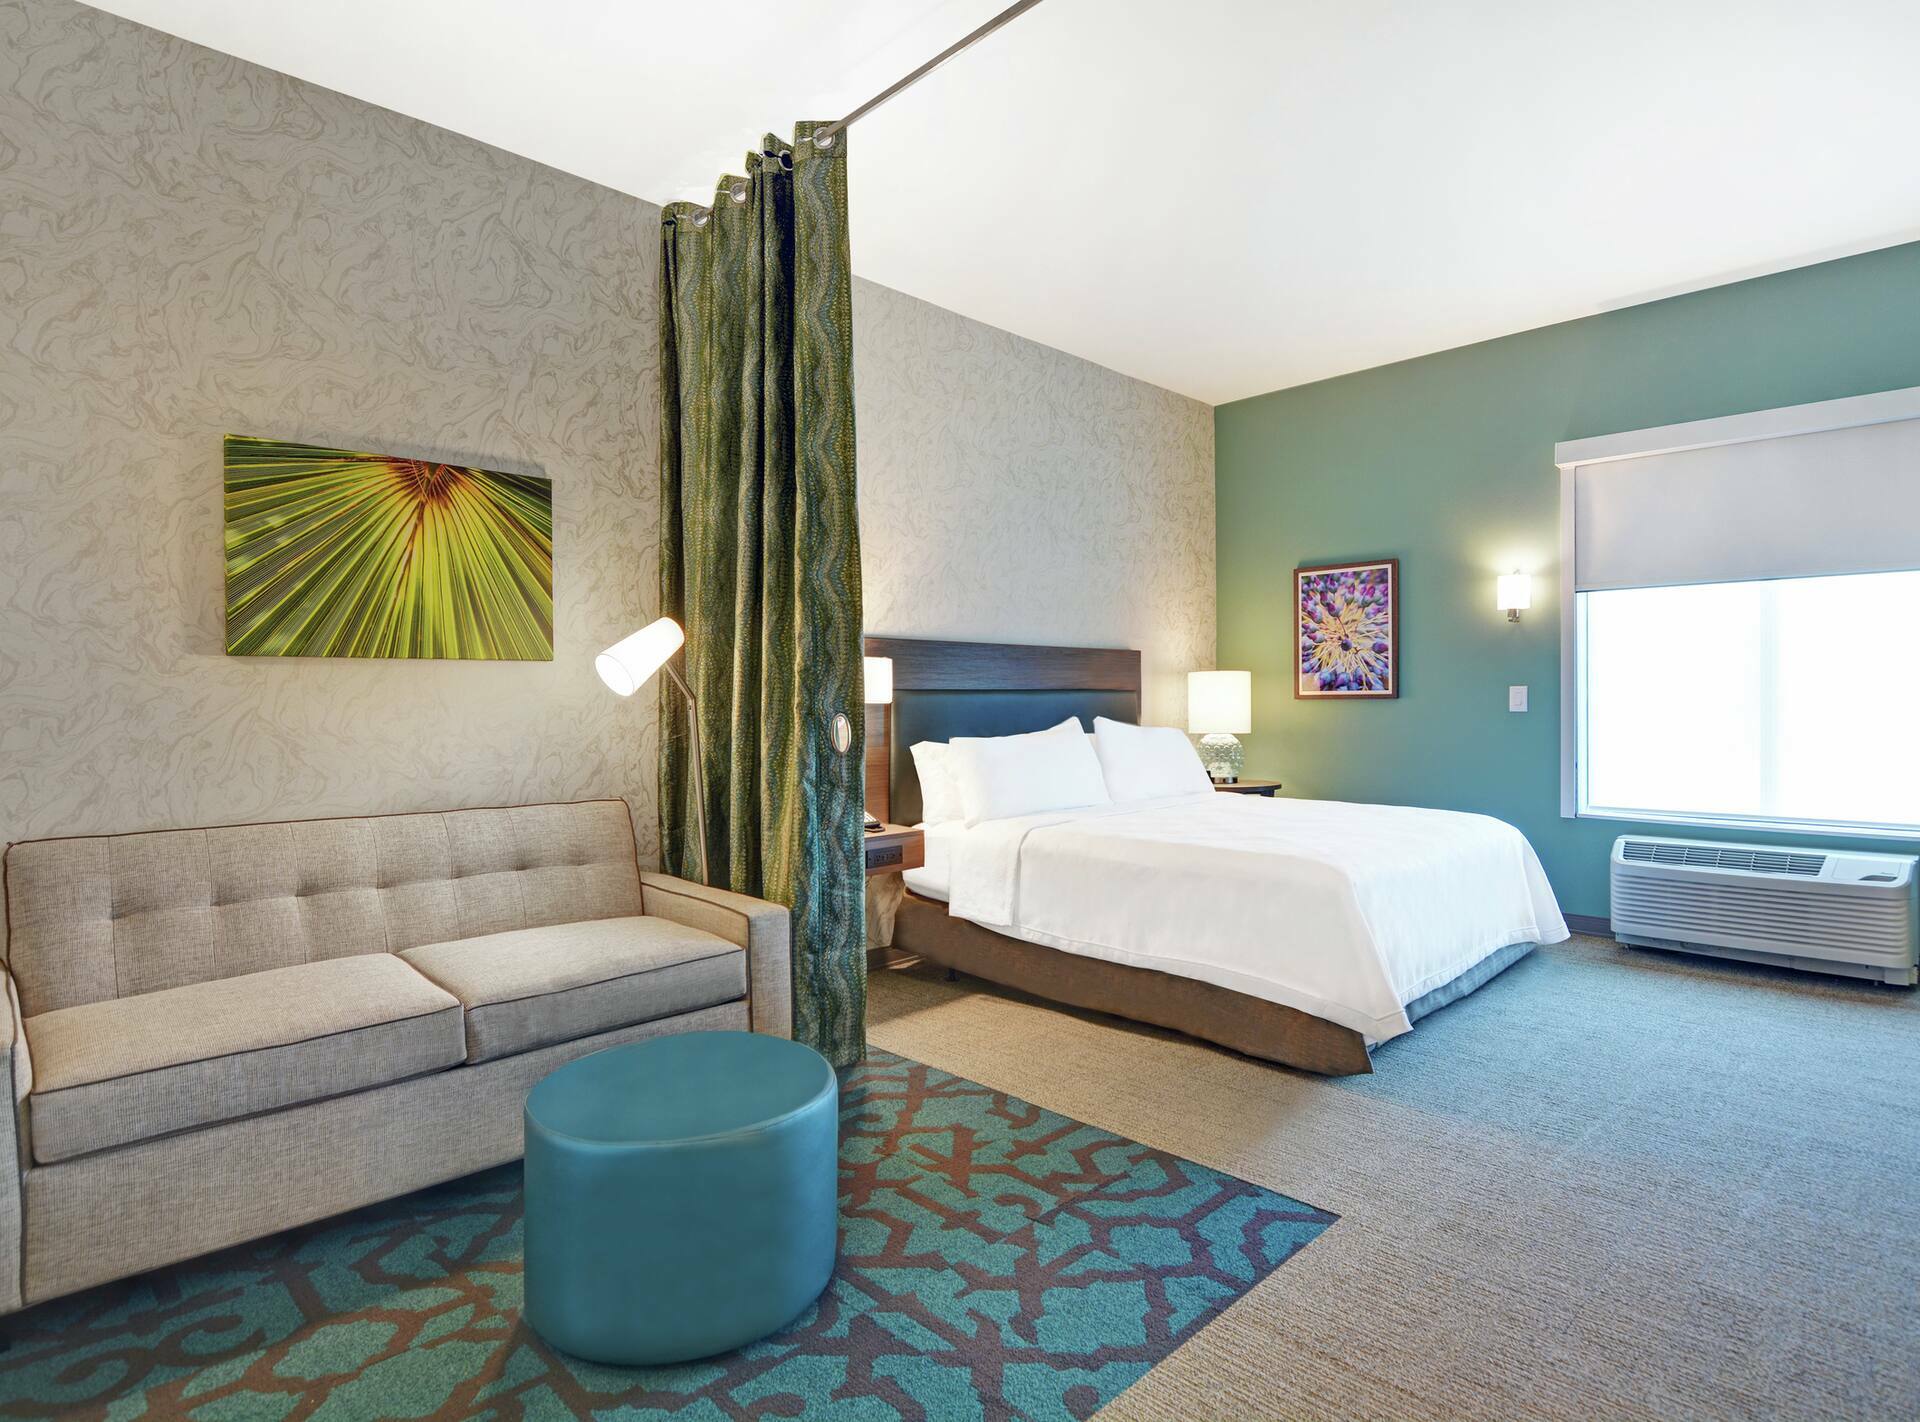 Photo of Home2 Suites by Hilton Charleston Daniel Island, Daniel Island, SC